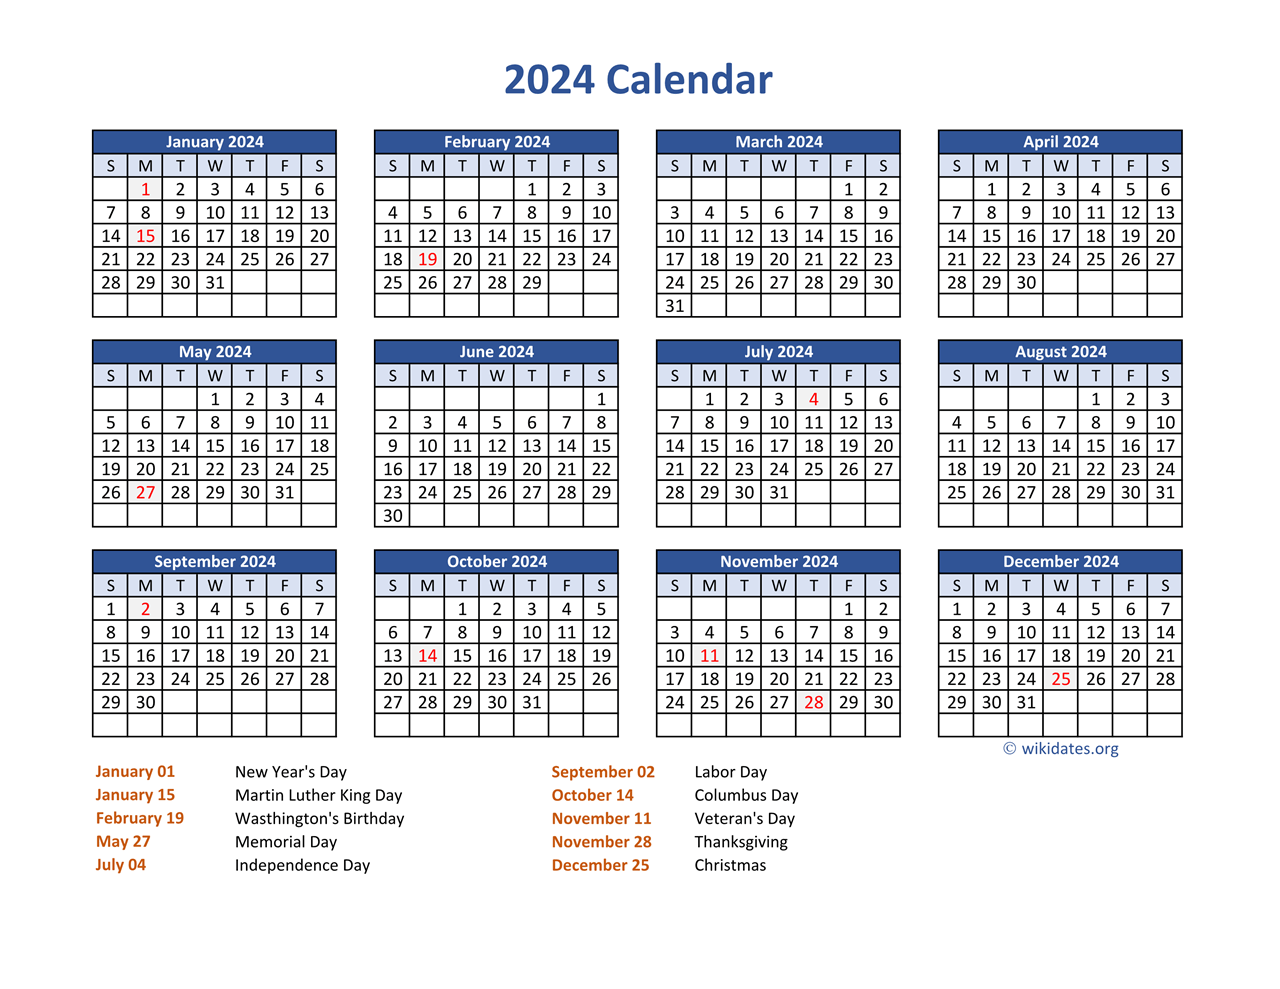 Pdf Calendar 2024 With Federal Holidays | Wikidates for 2024 Holiday Calendar Printable